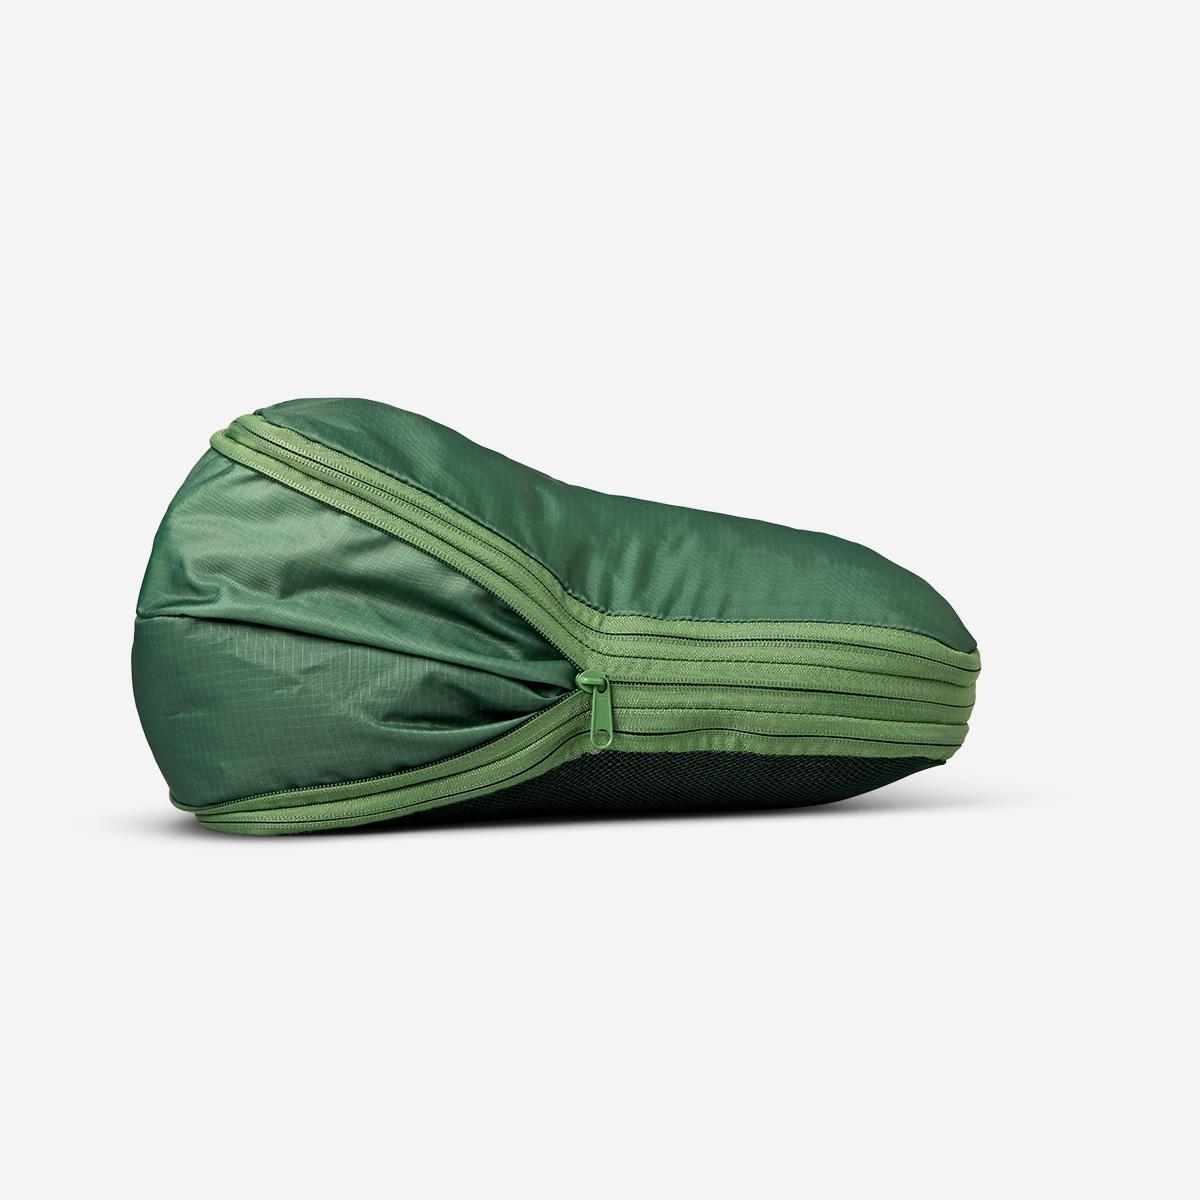 Green compression organiser bag. medium